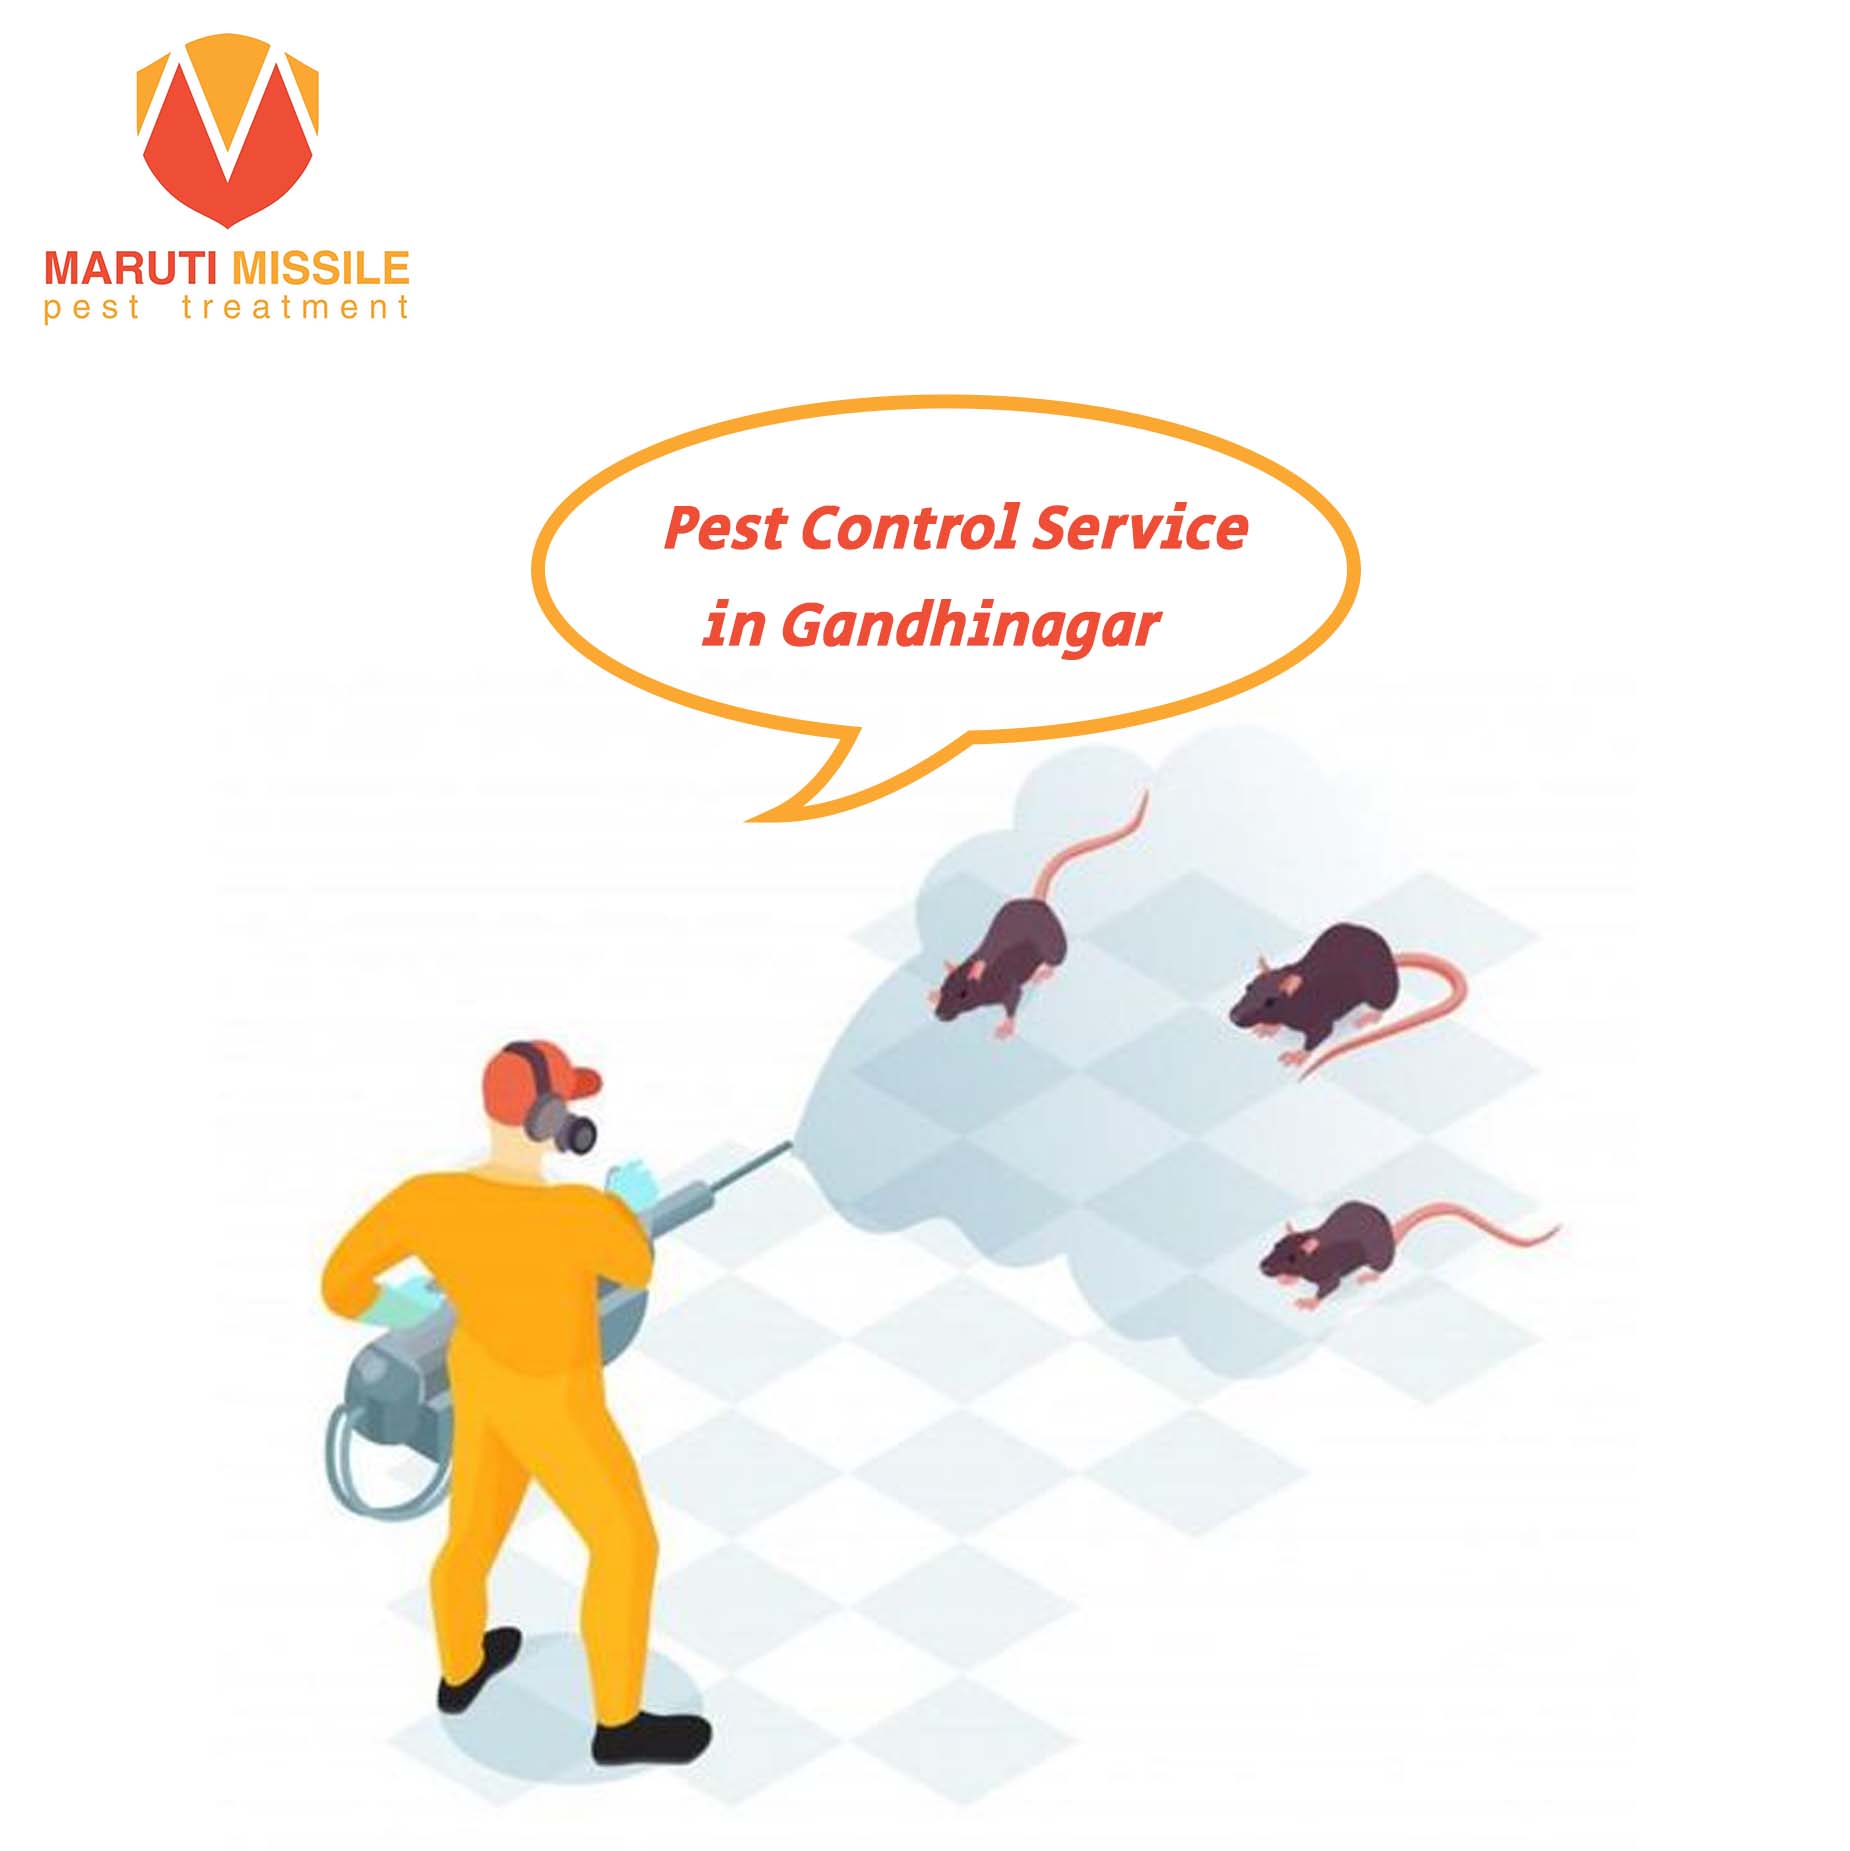 Pest Control Service in Gandhinagar